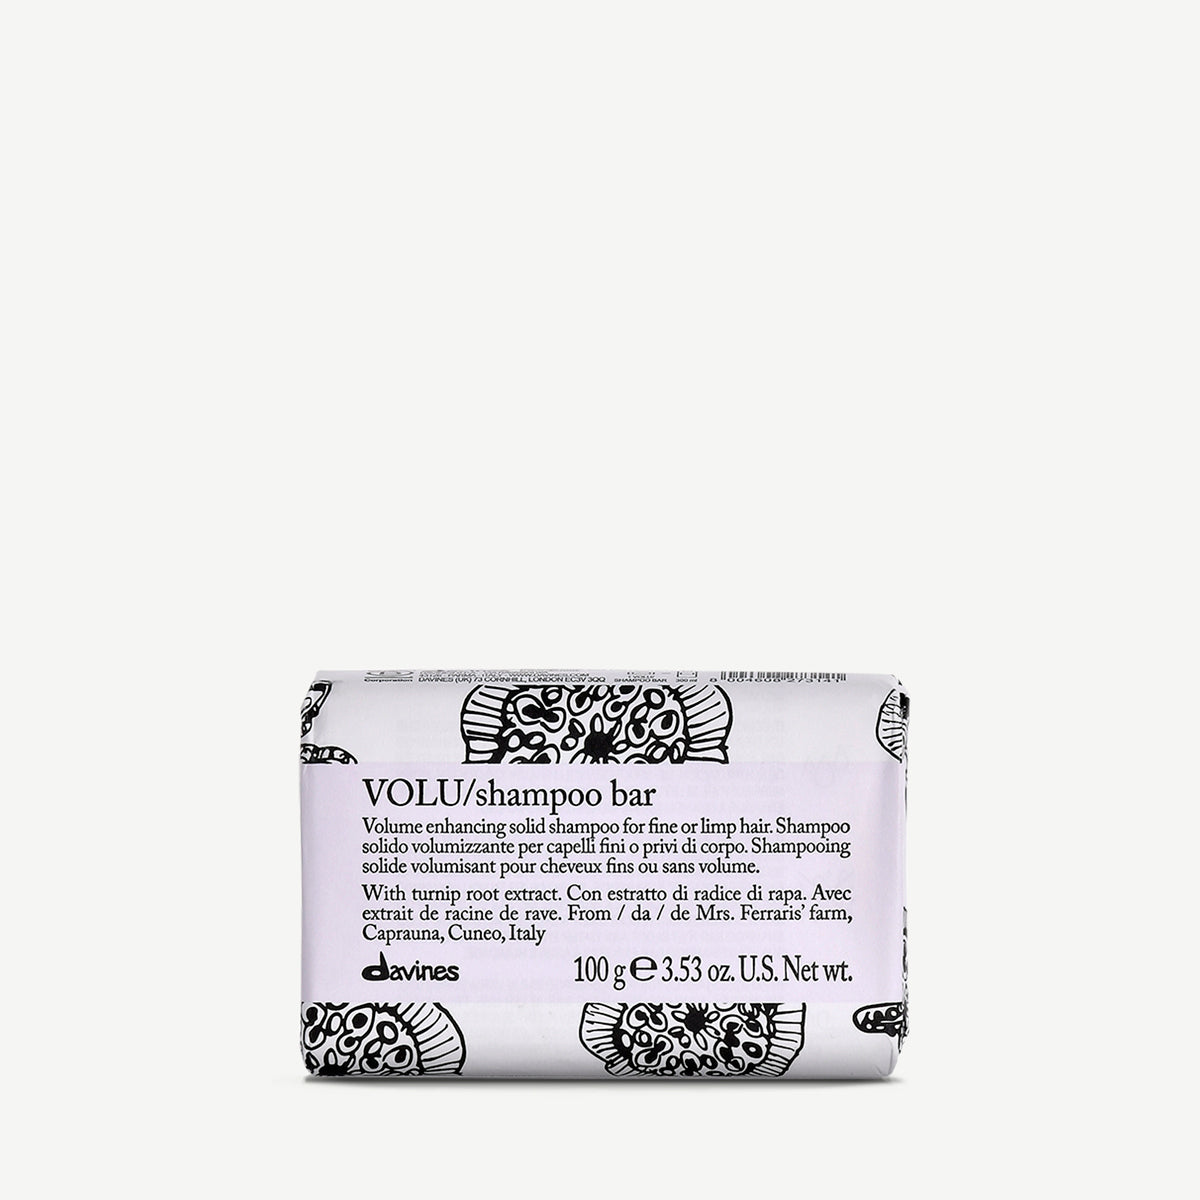 VOLU Shampoo Bar 1  100 grDavines
